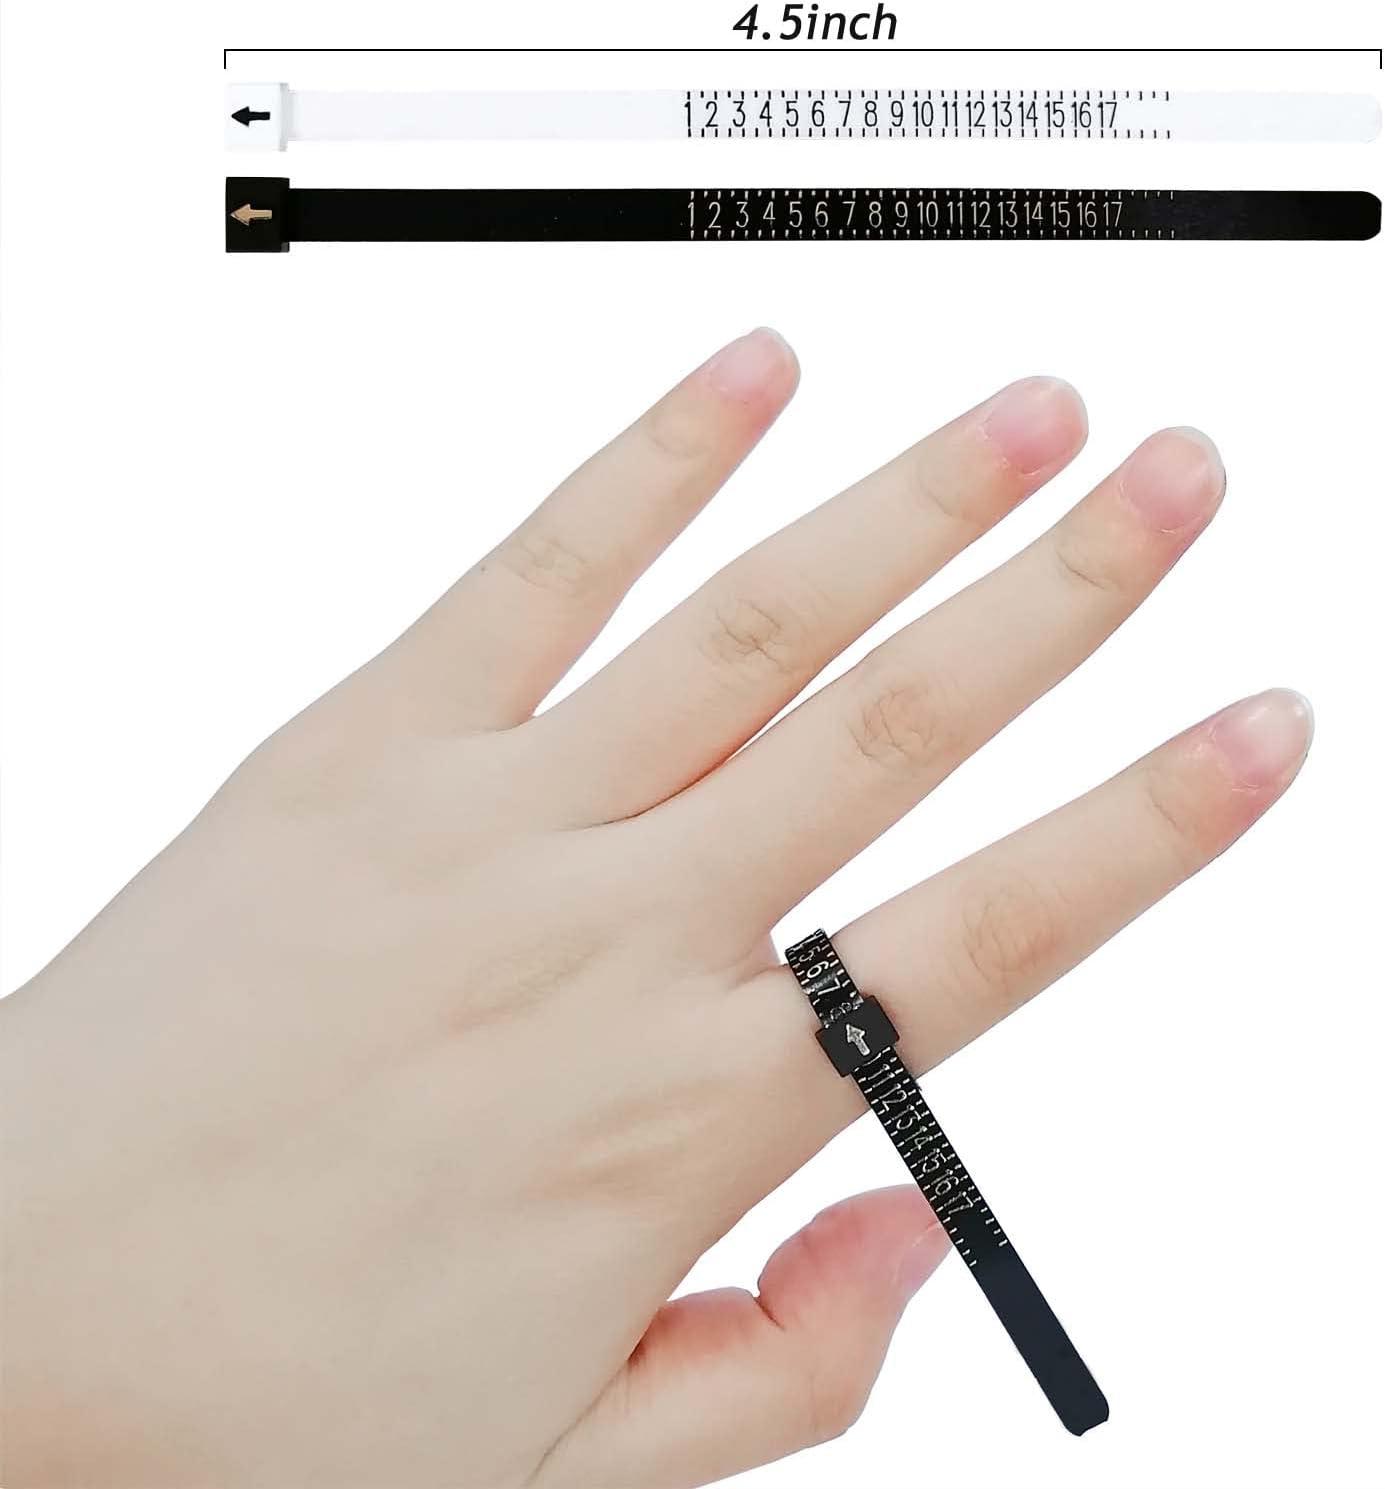 USA Black Plastic Ring/Finger Sizer Measuring Tool Gauge Sizes 1-17